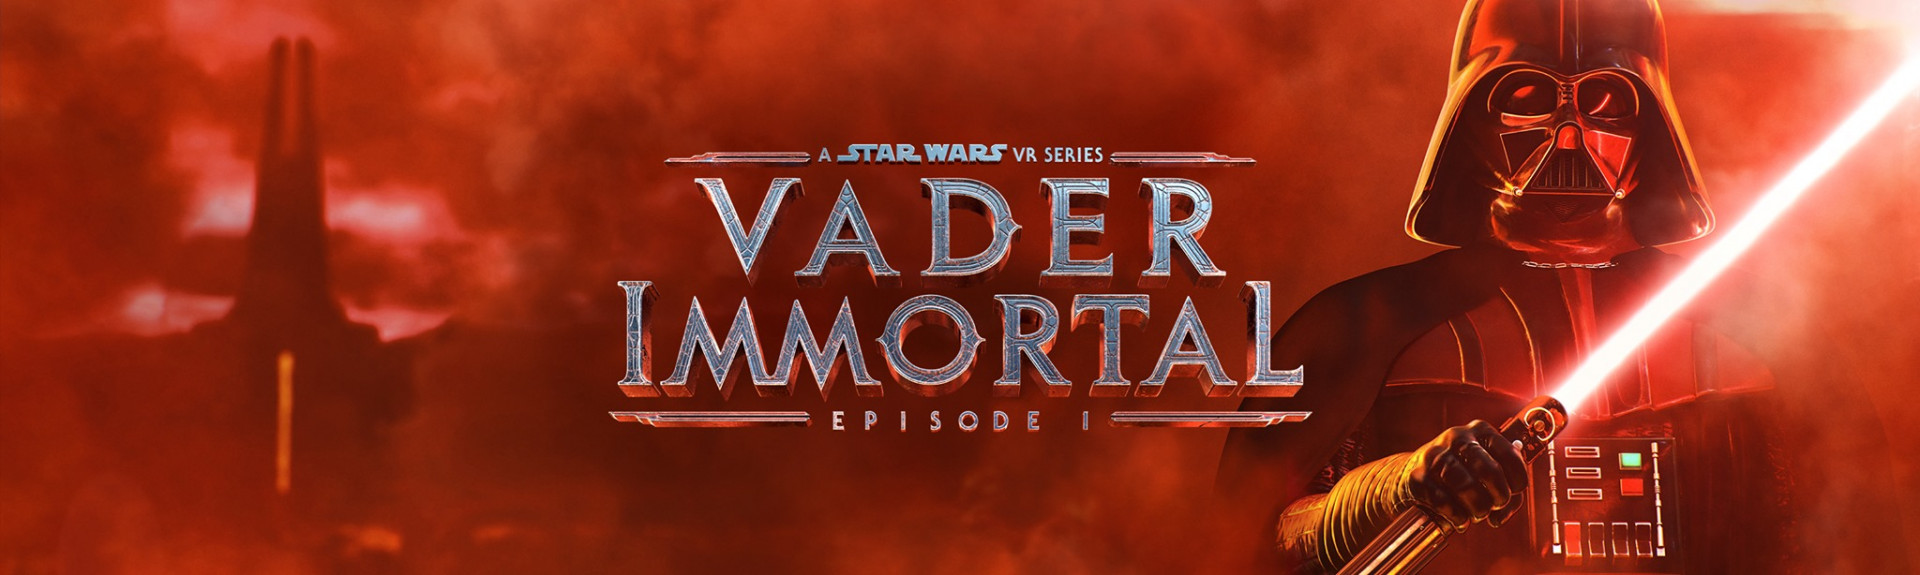 Vader Immortal: Episodio I